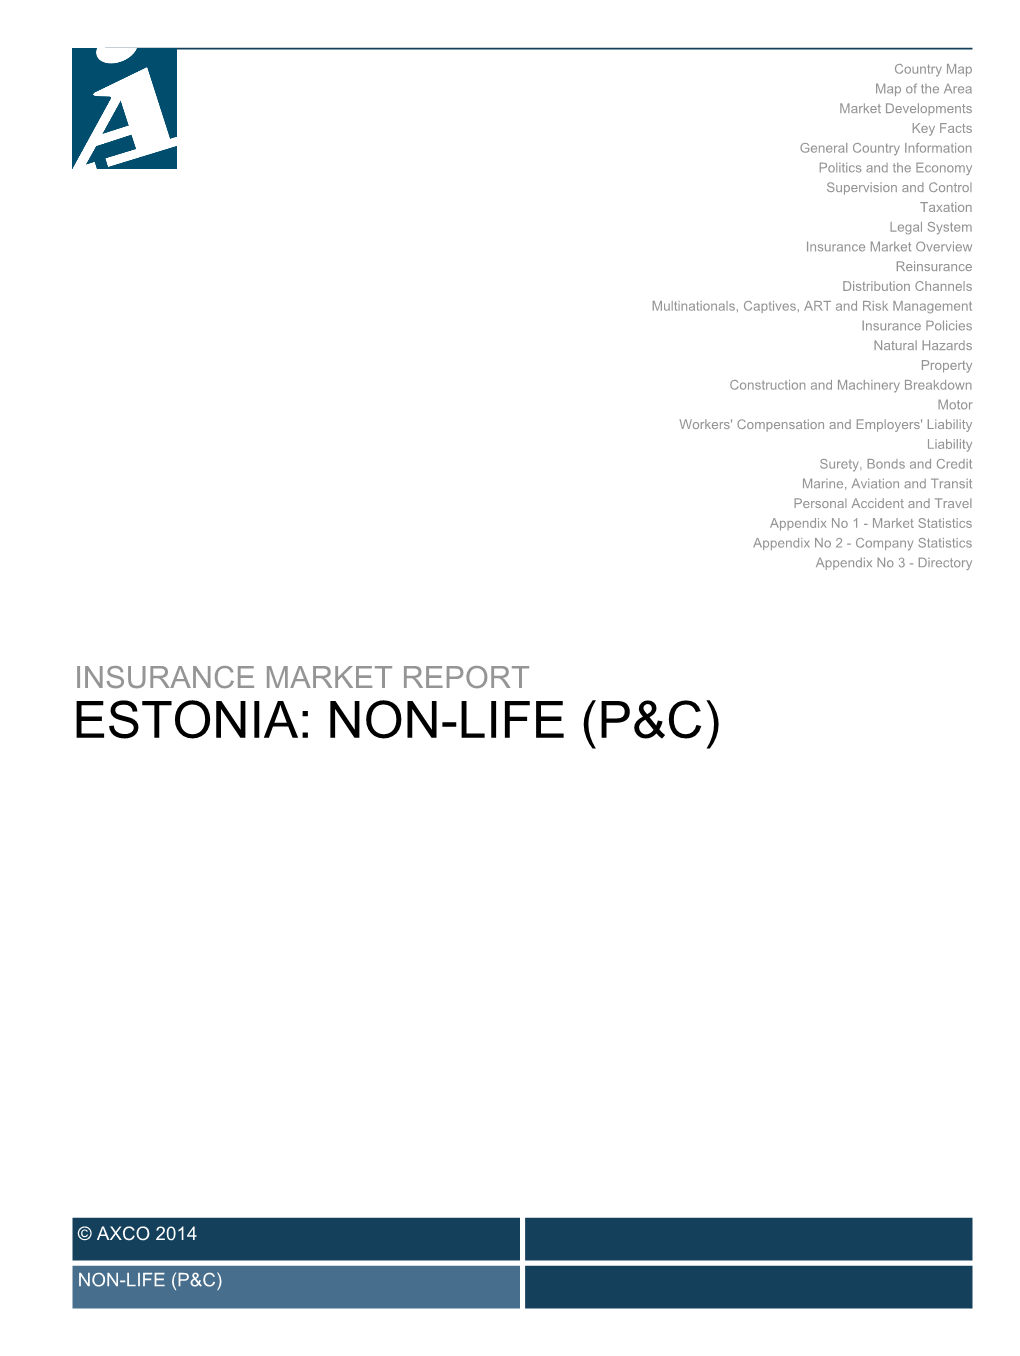 Estonia: Non-Life (P&C)